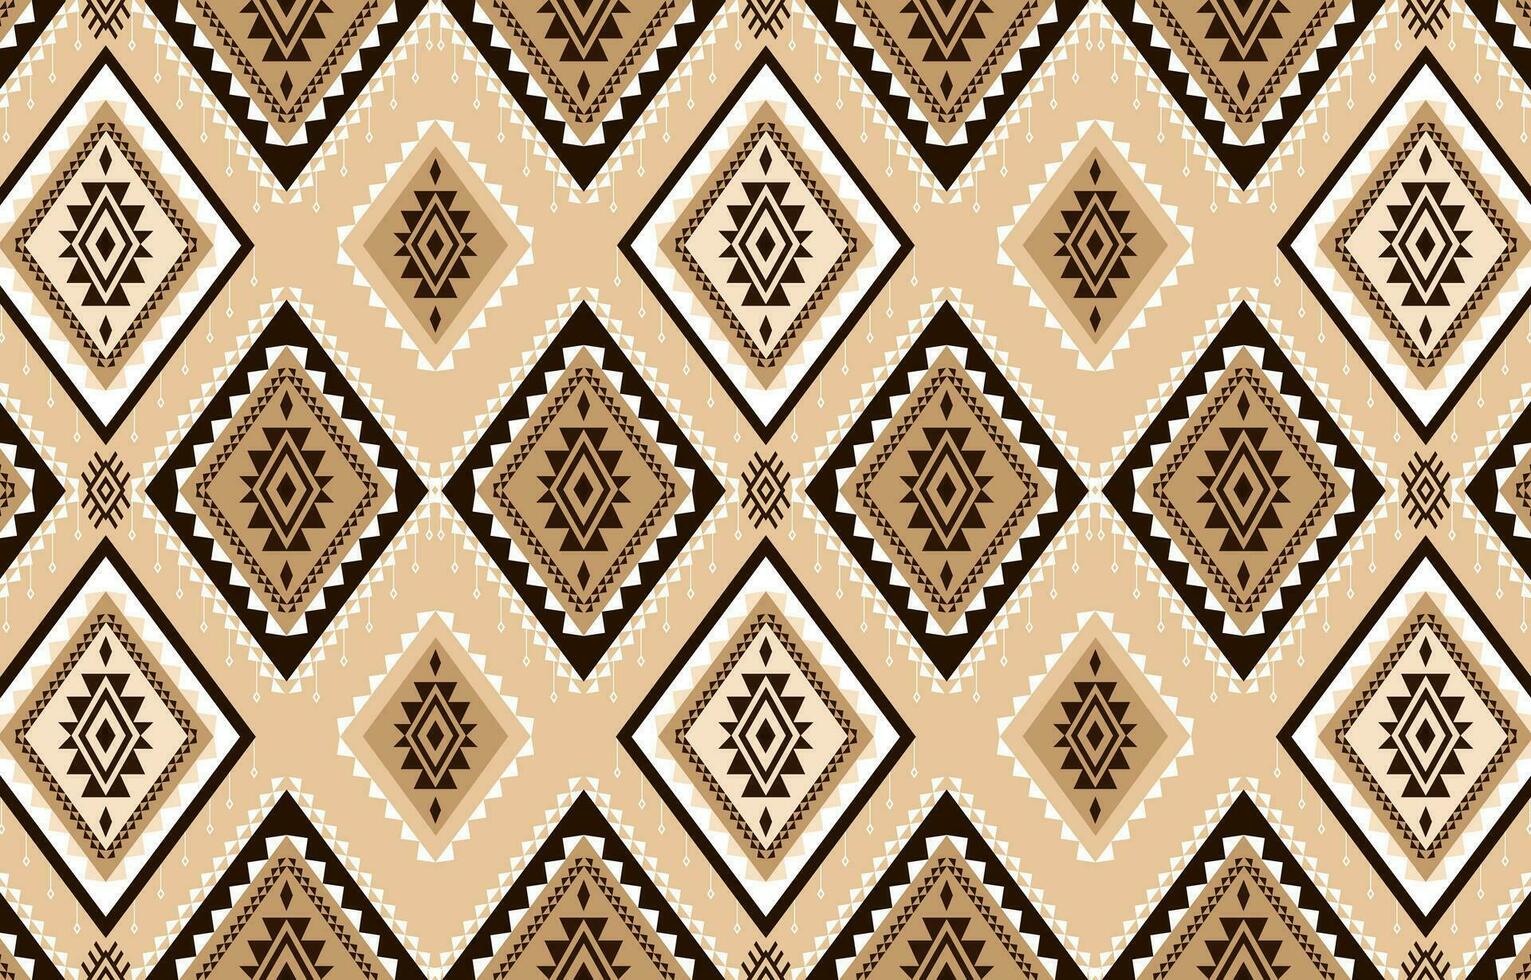 Ethnic tribal ikat seamless pattern design.  Aztec fabric carpet mandala ornament chevron textile wallpaper decoration.  Indian geometric fabric African American texture vector illustrations.